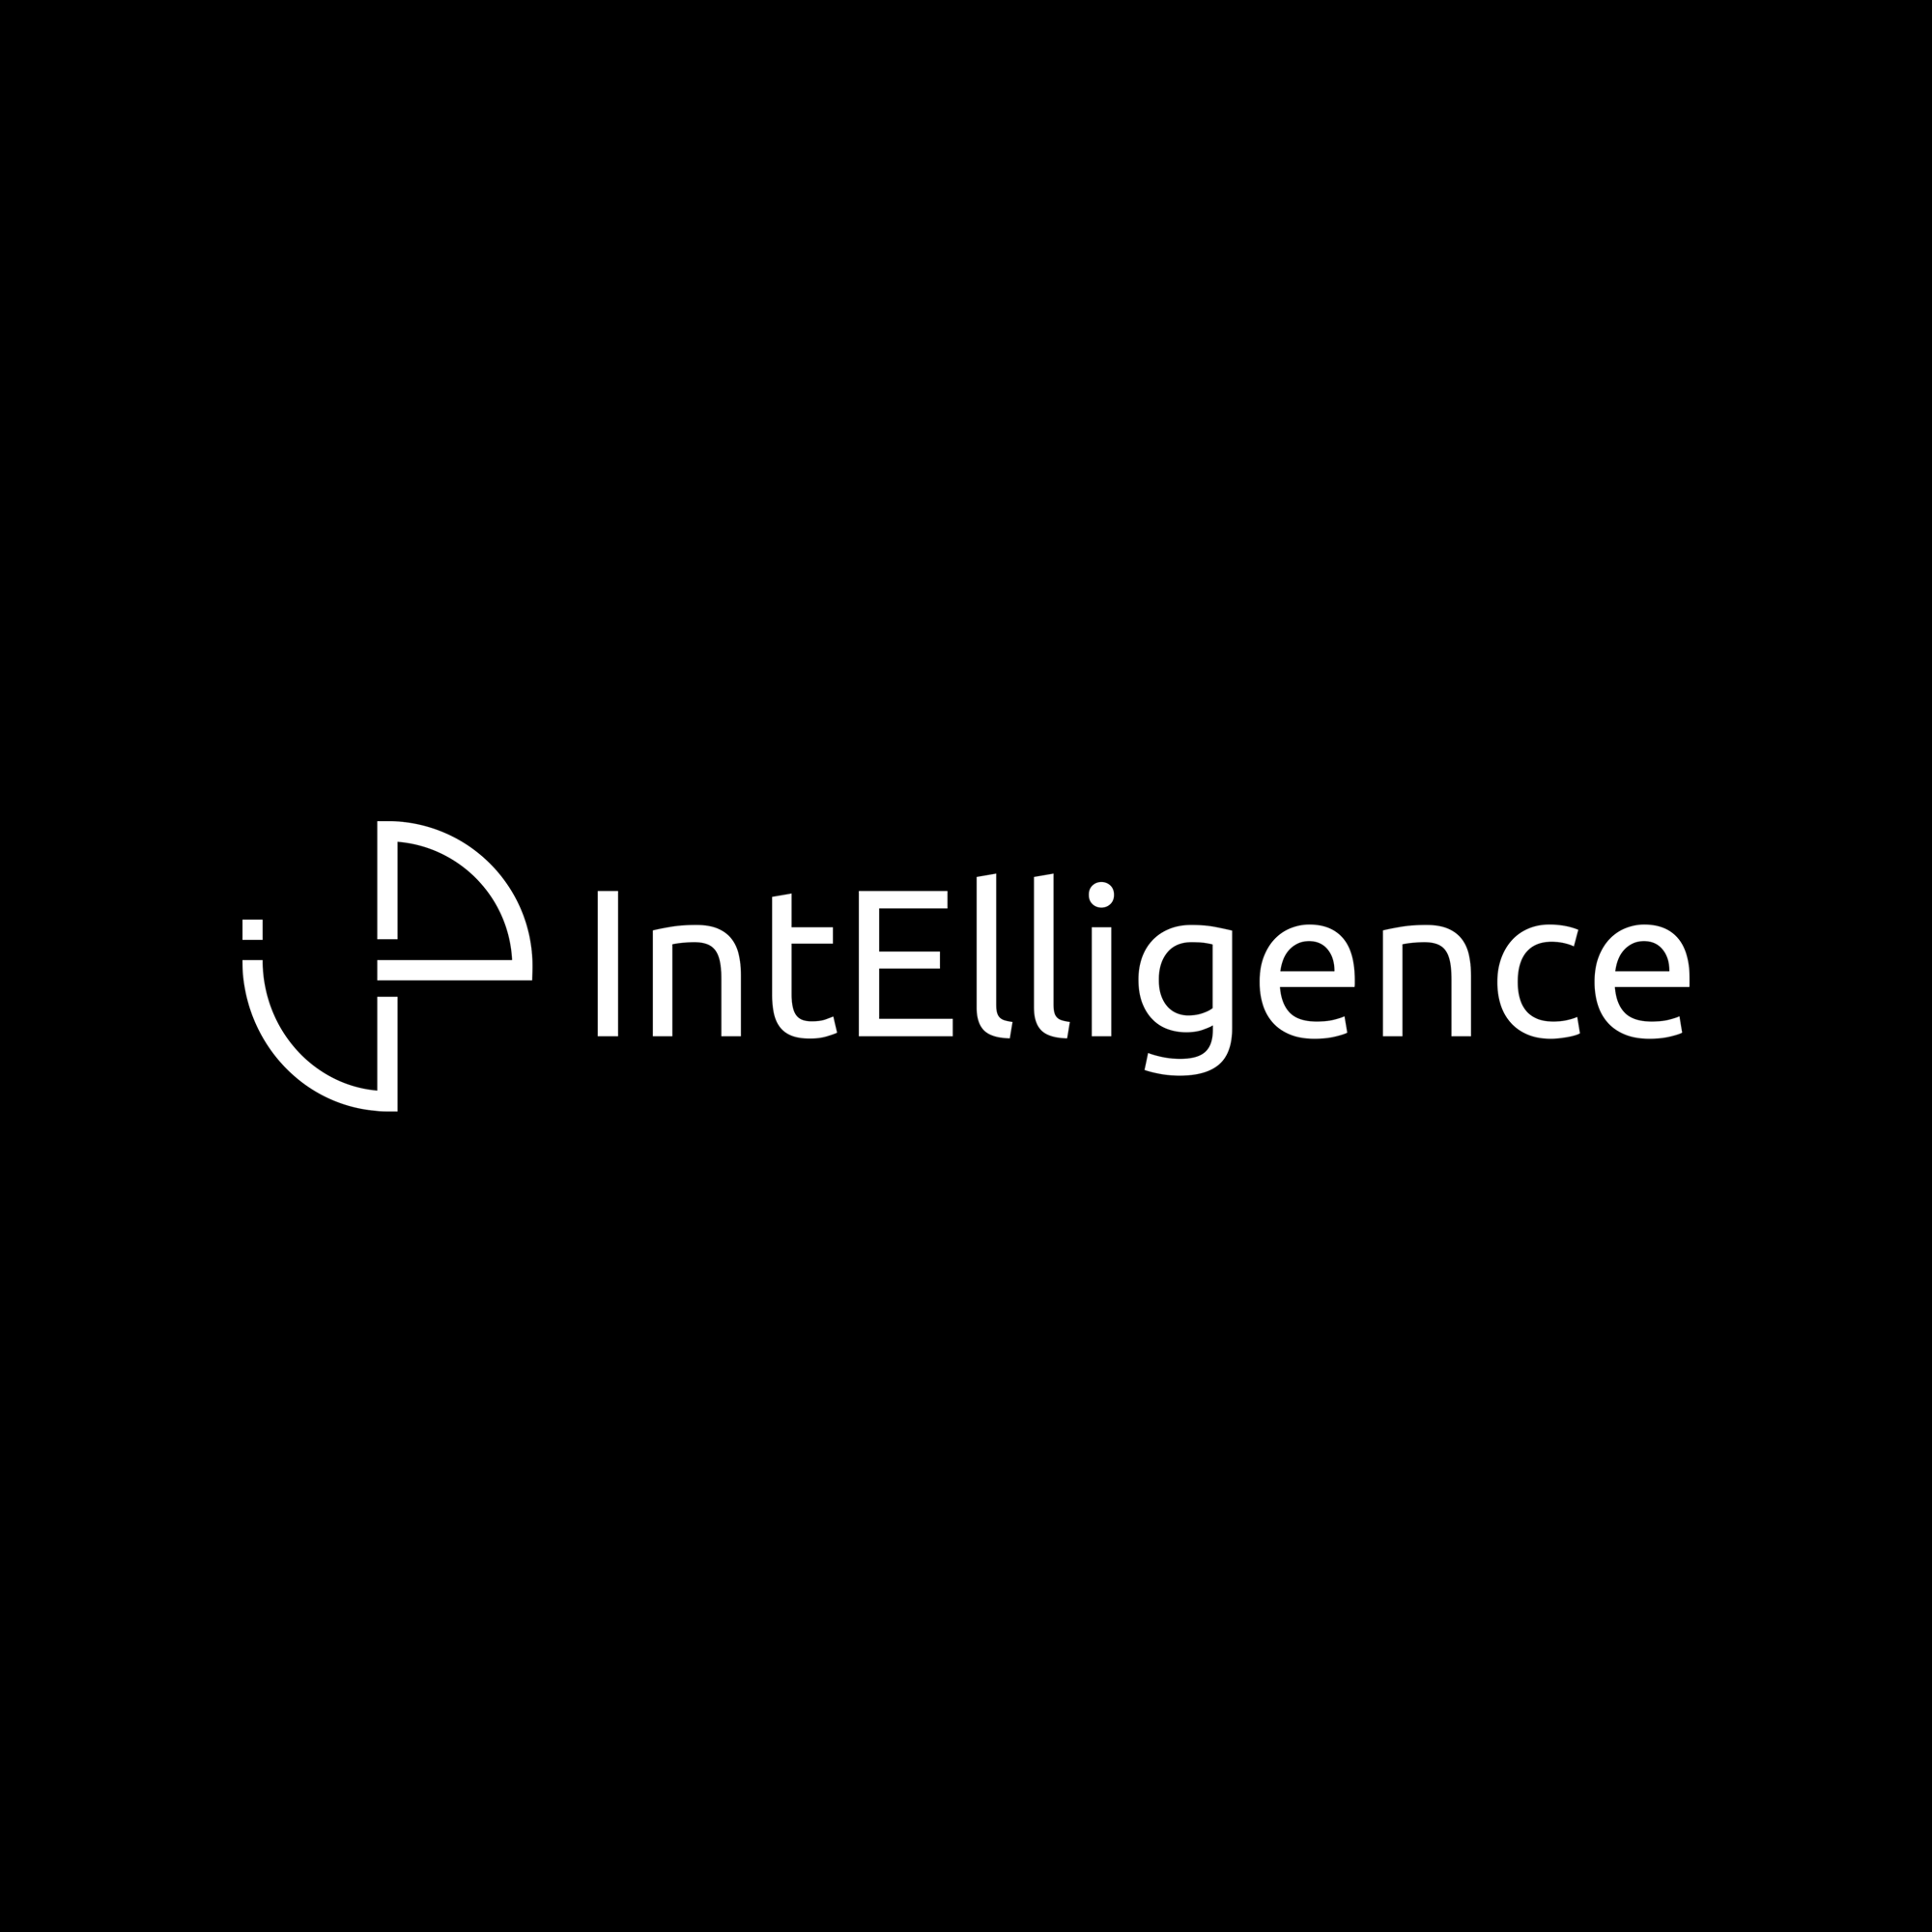 IntElligence